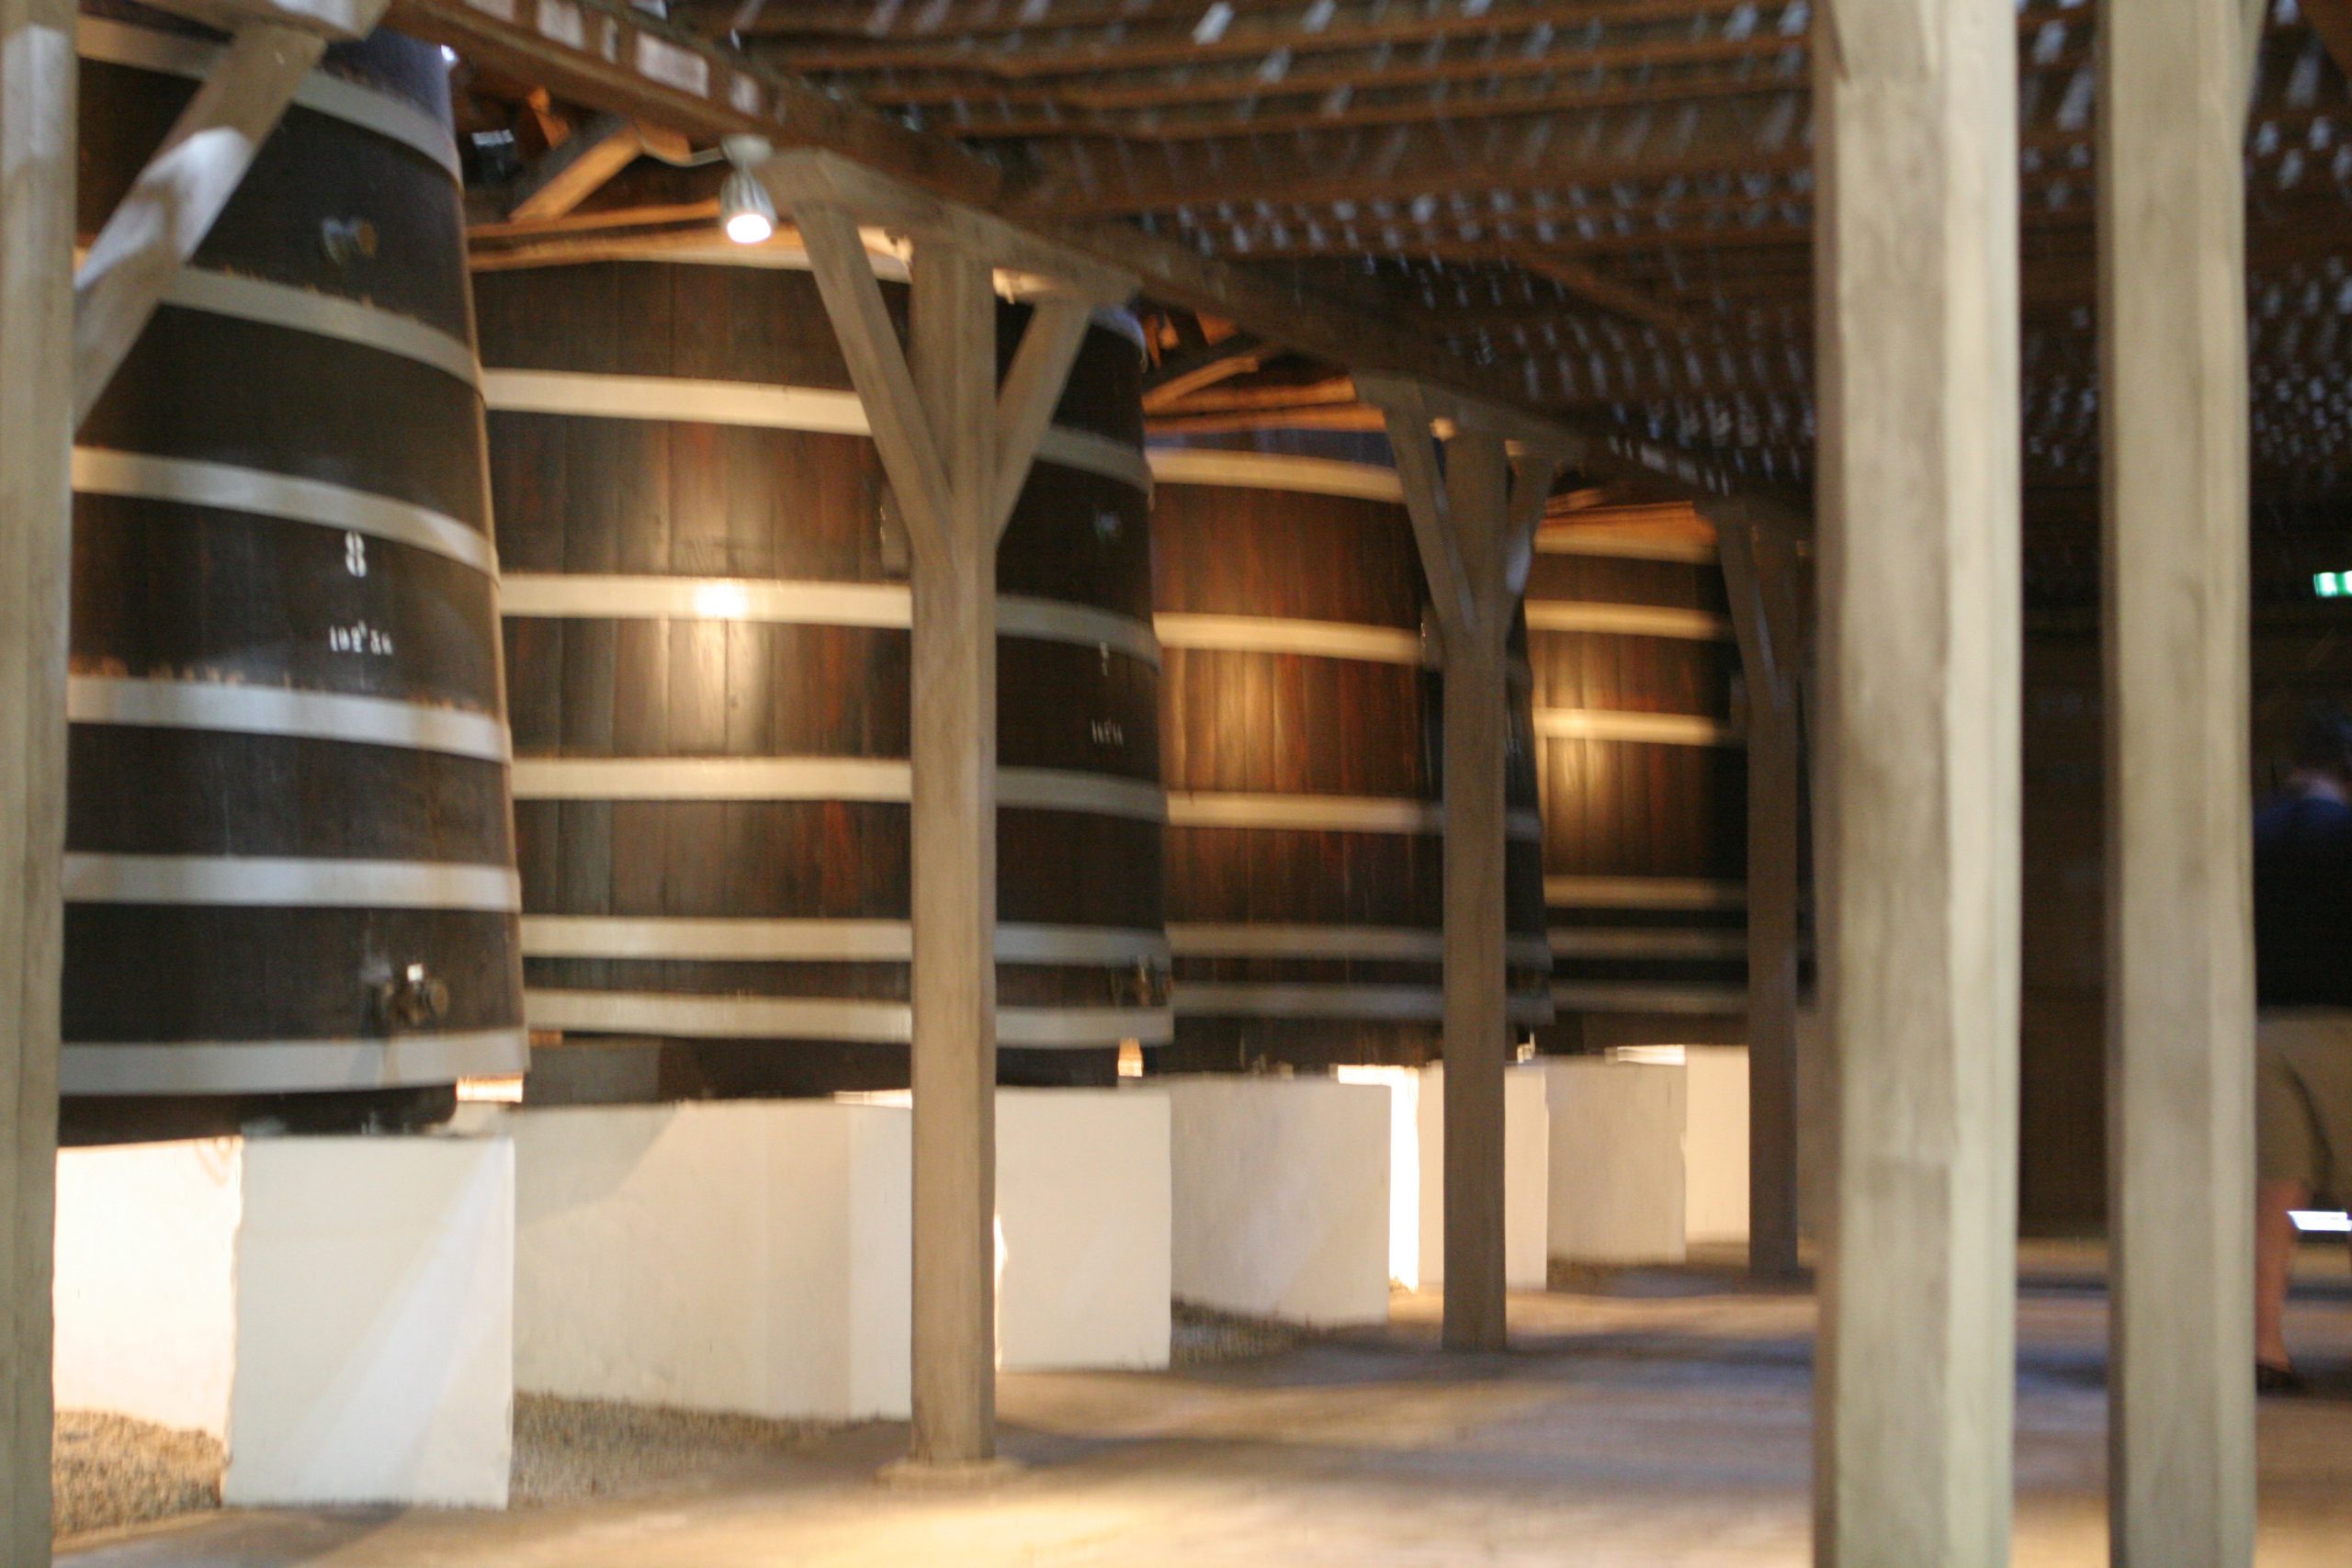 chateau lynch bages fermentation vats